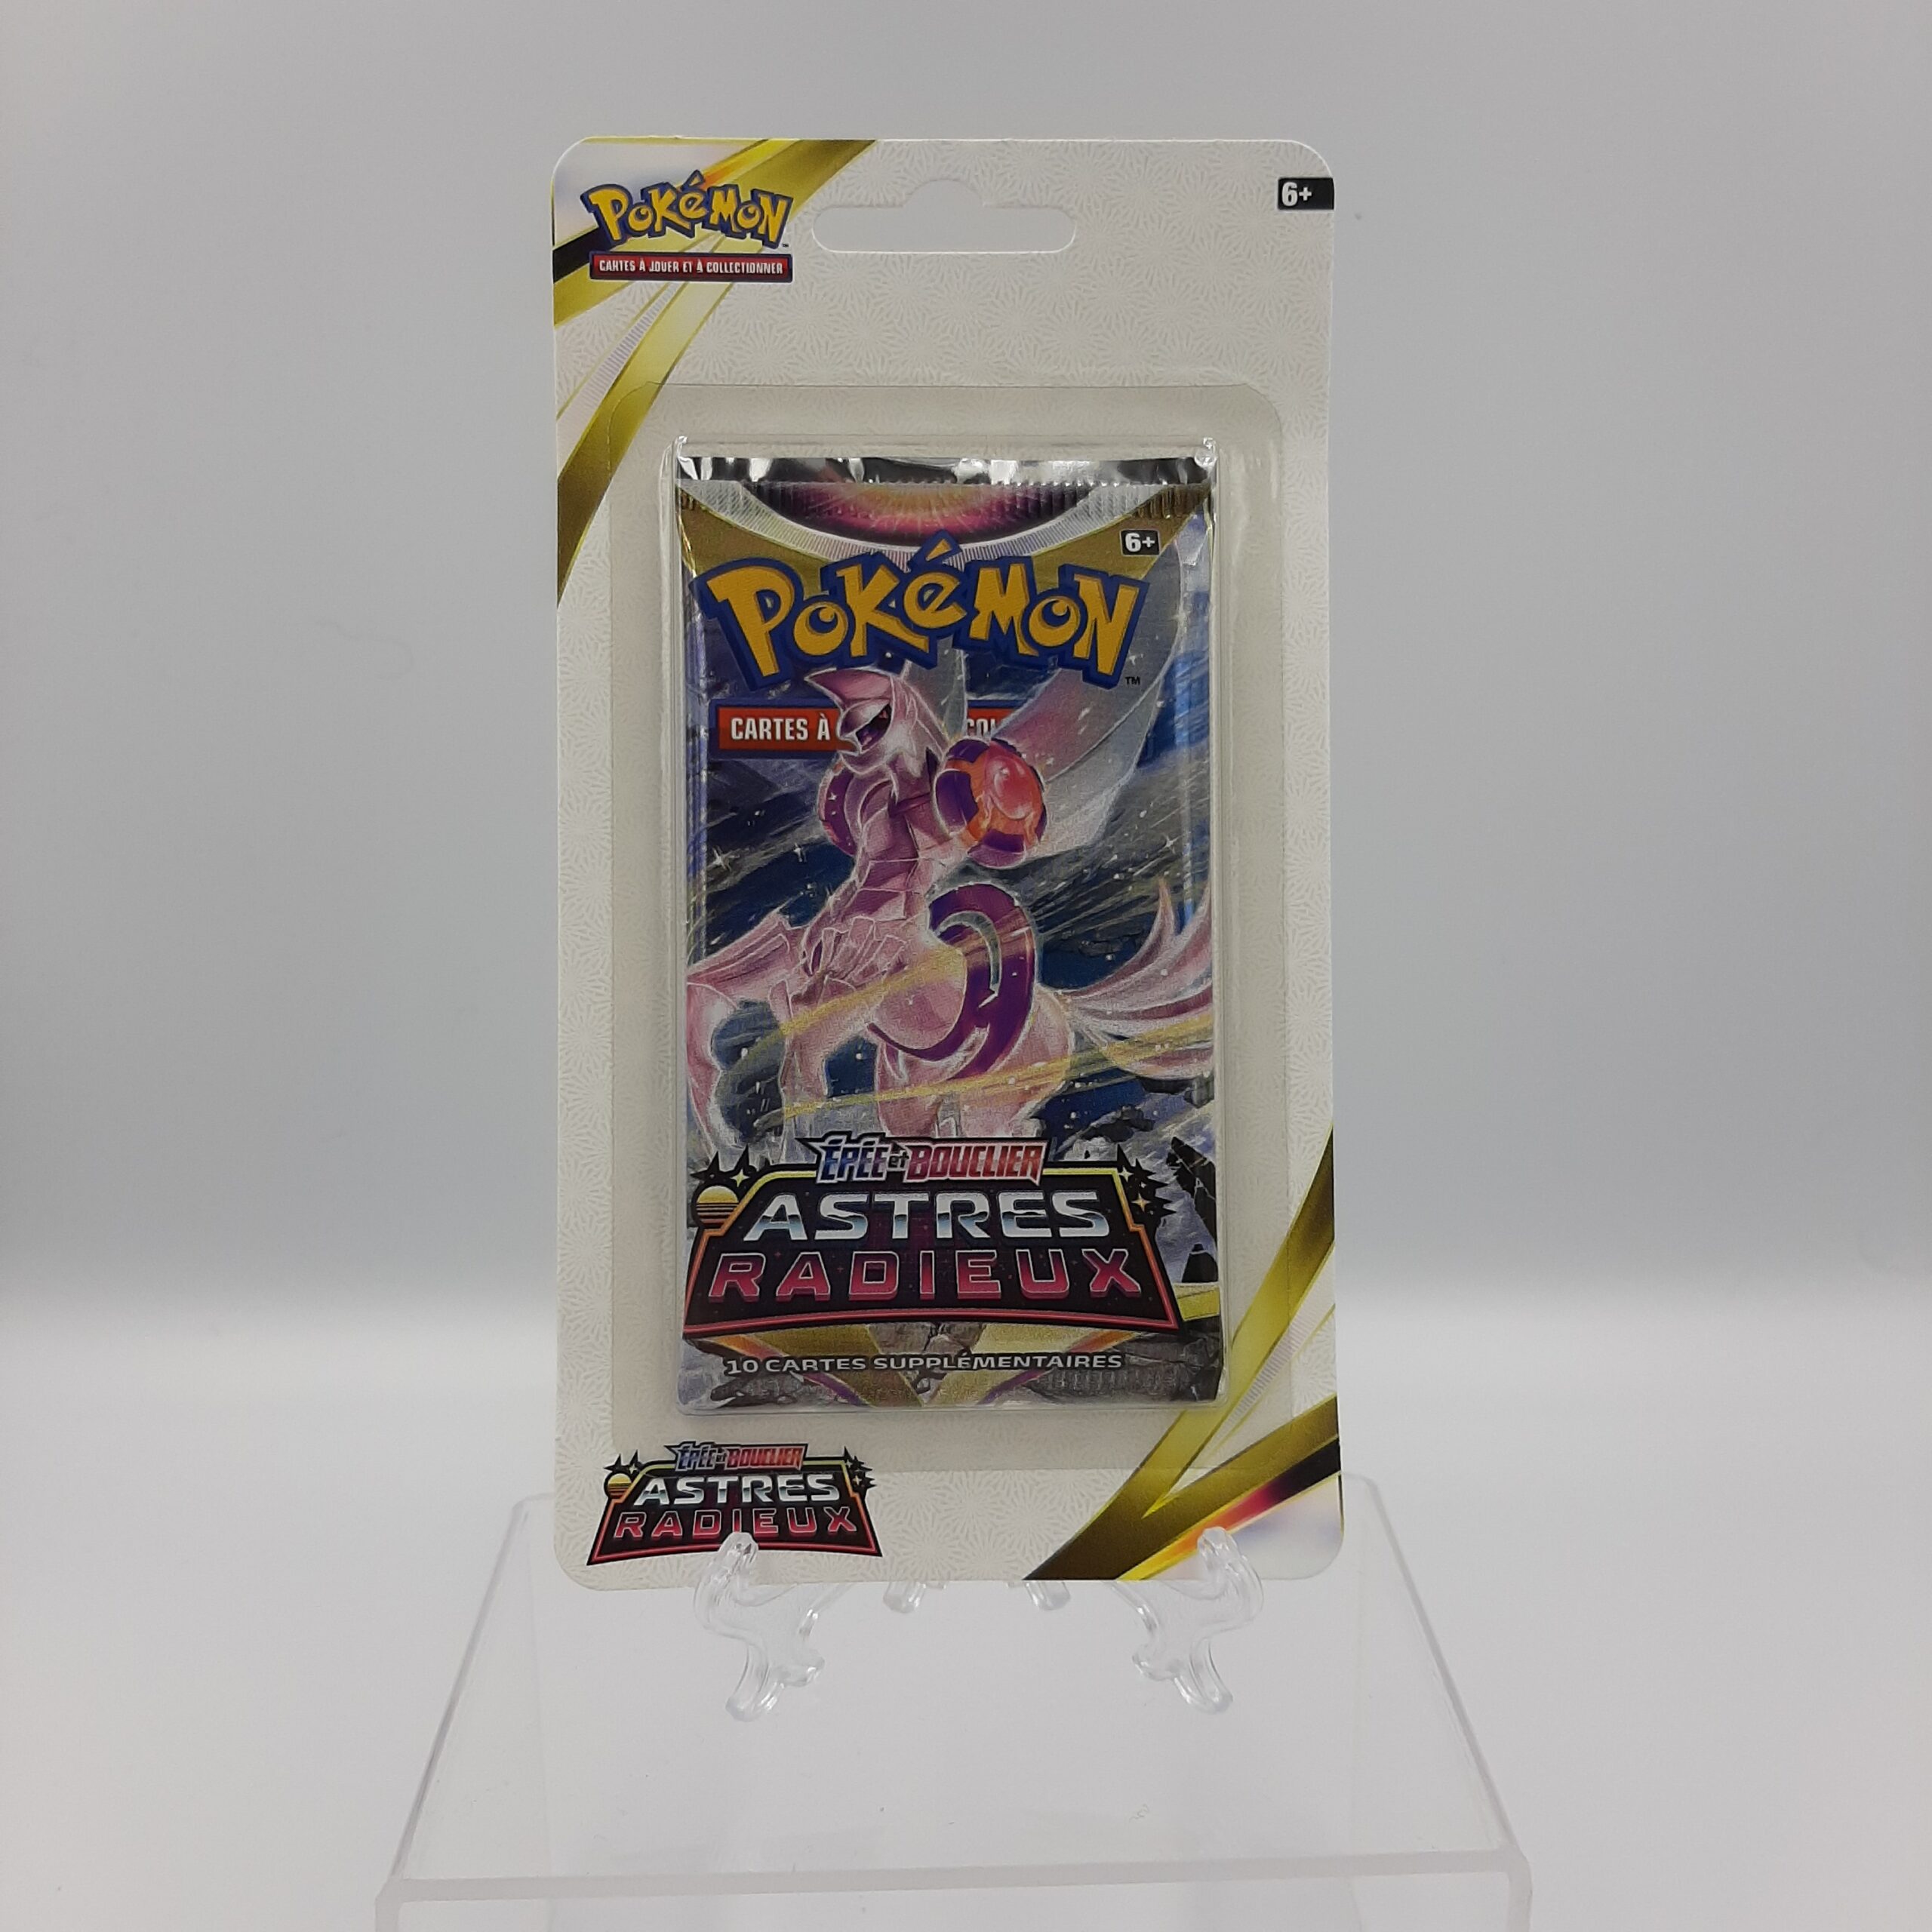 Booster scellé de 10 cartes Pokémon – 151 – Ecarlate et Violet – EV3.5 -  AtouGeek